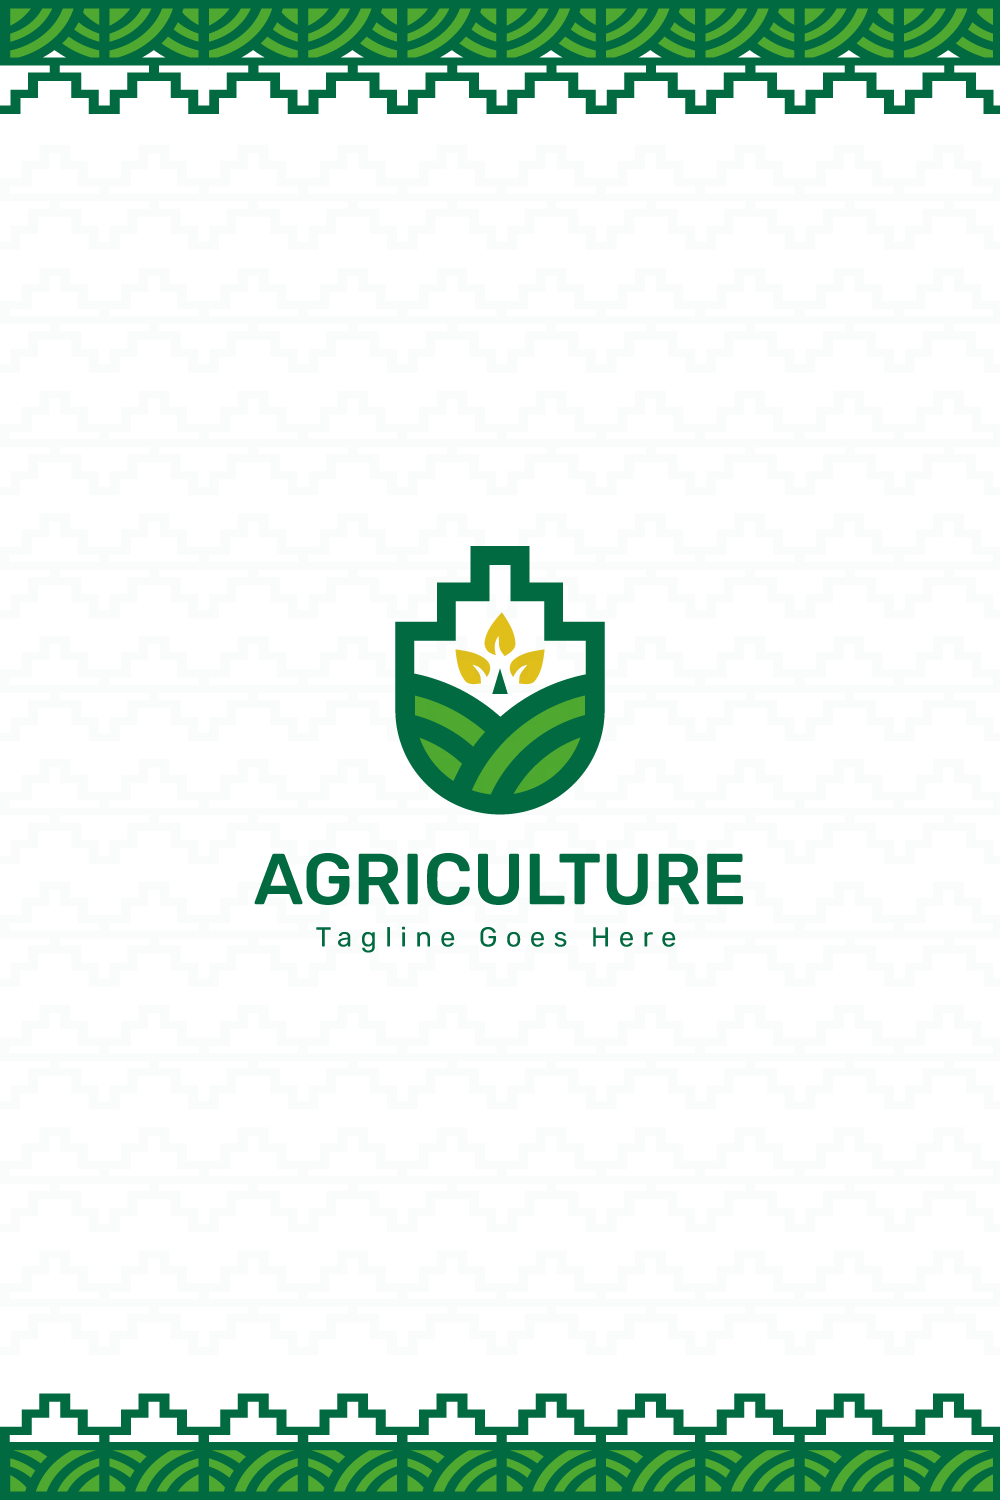 Agriculture | farmer | Wheat | Garden | Nursery - logo design template pinterest preview image.